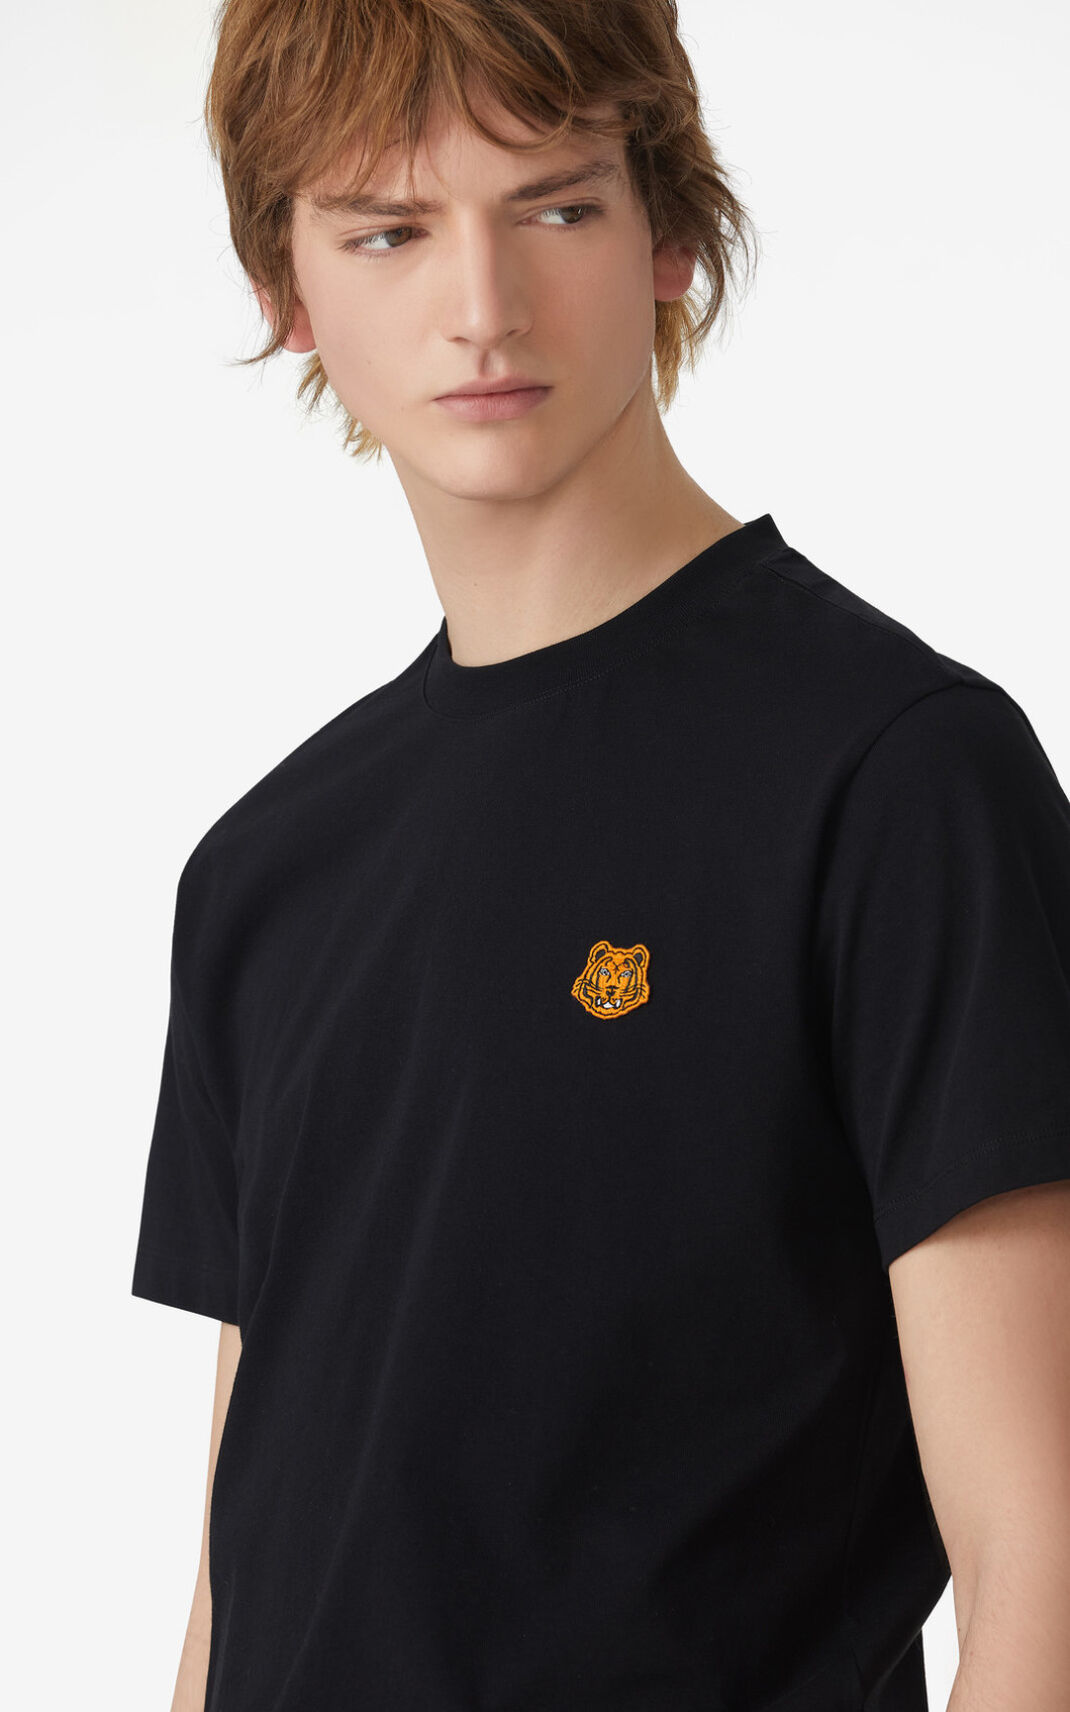 Kenzo 虎 Crest Tシャツ メンズ 黒 - AGIJLQ214